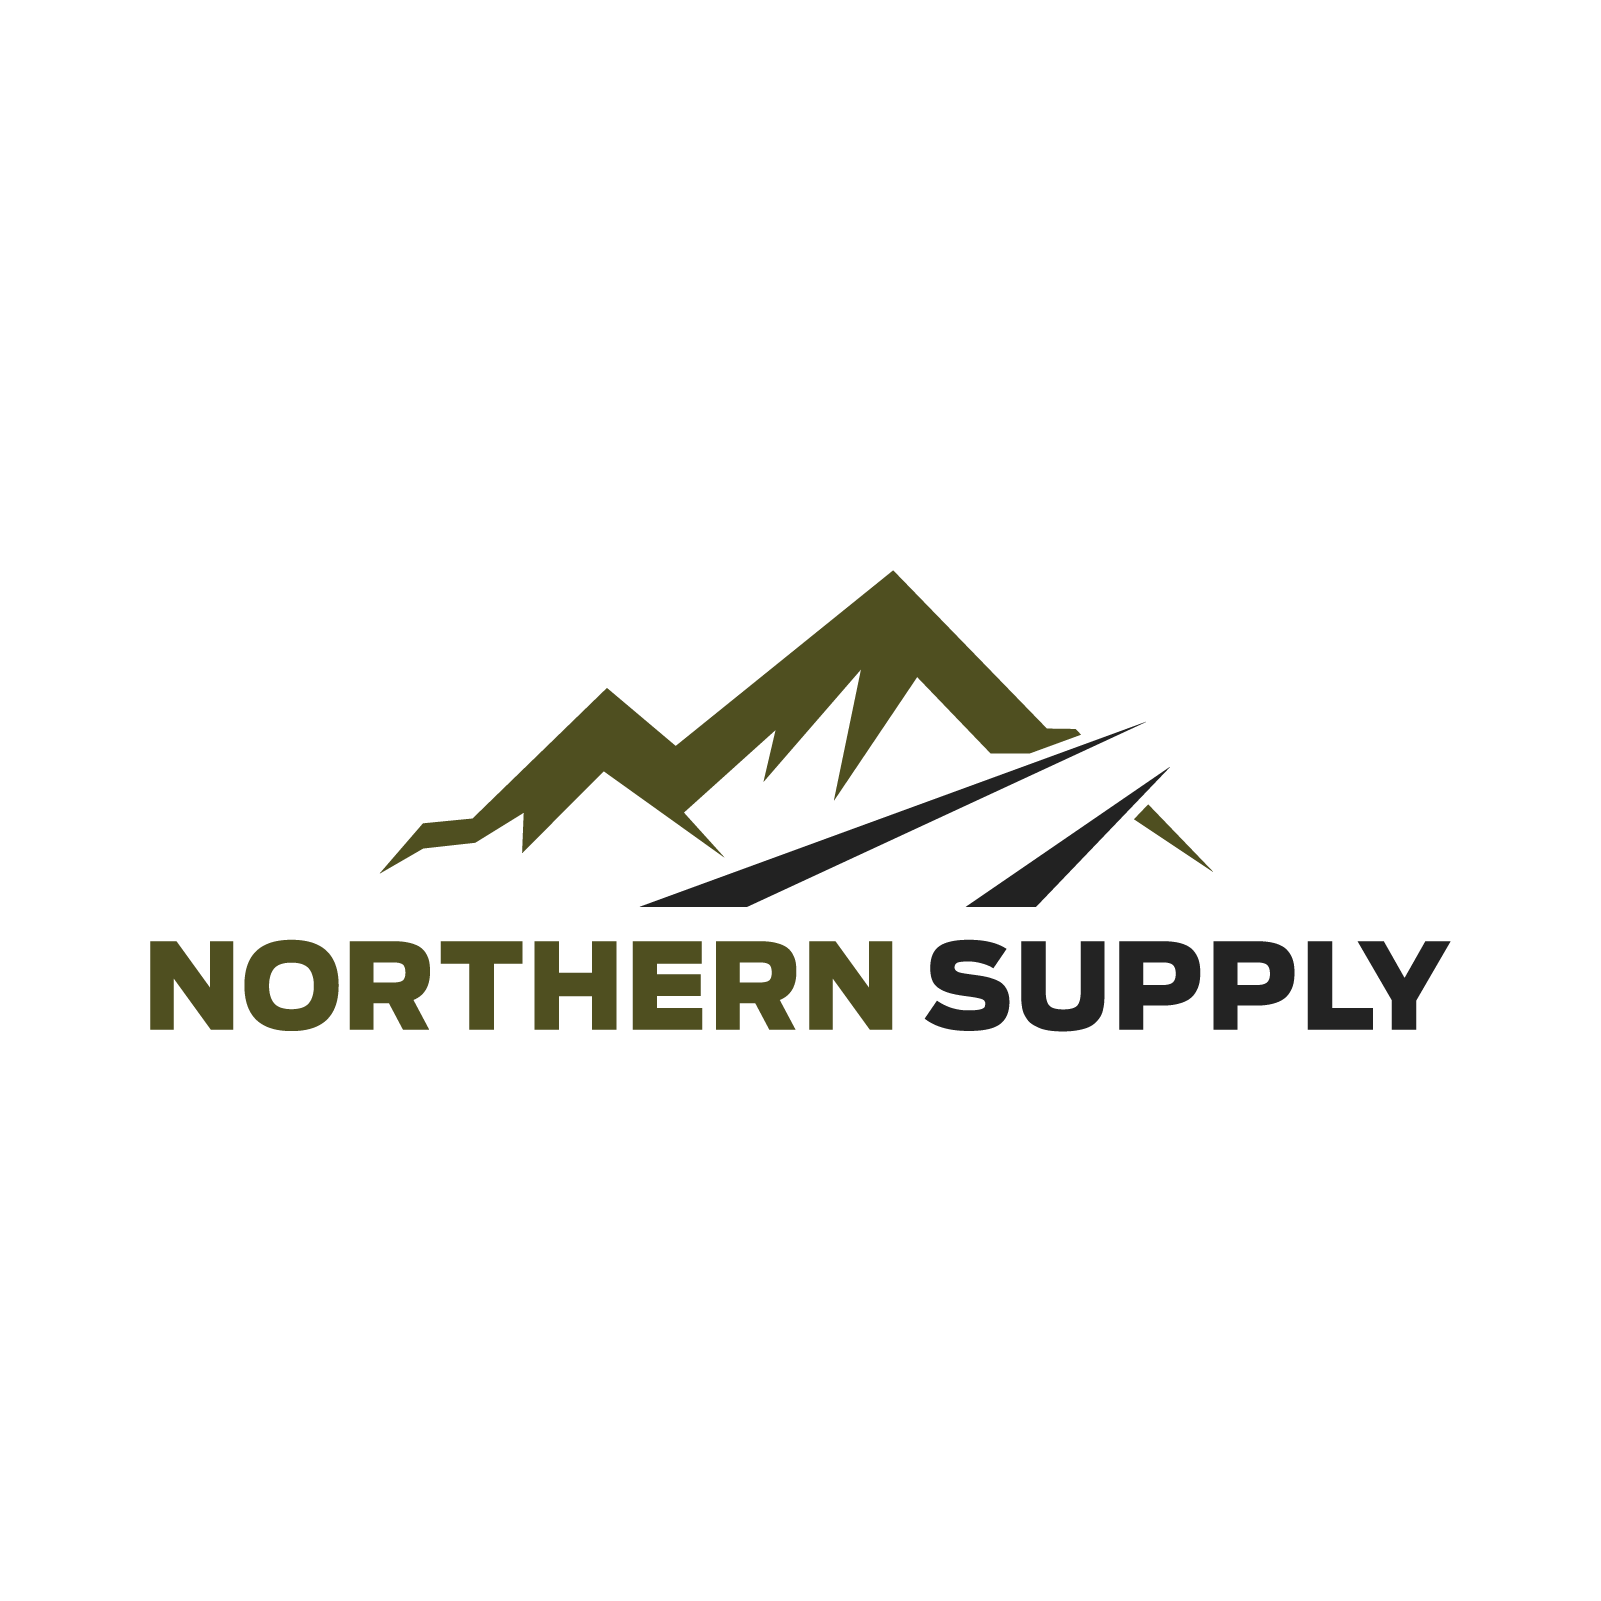 Northern Supply